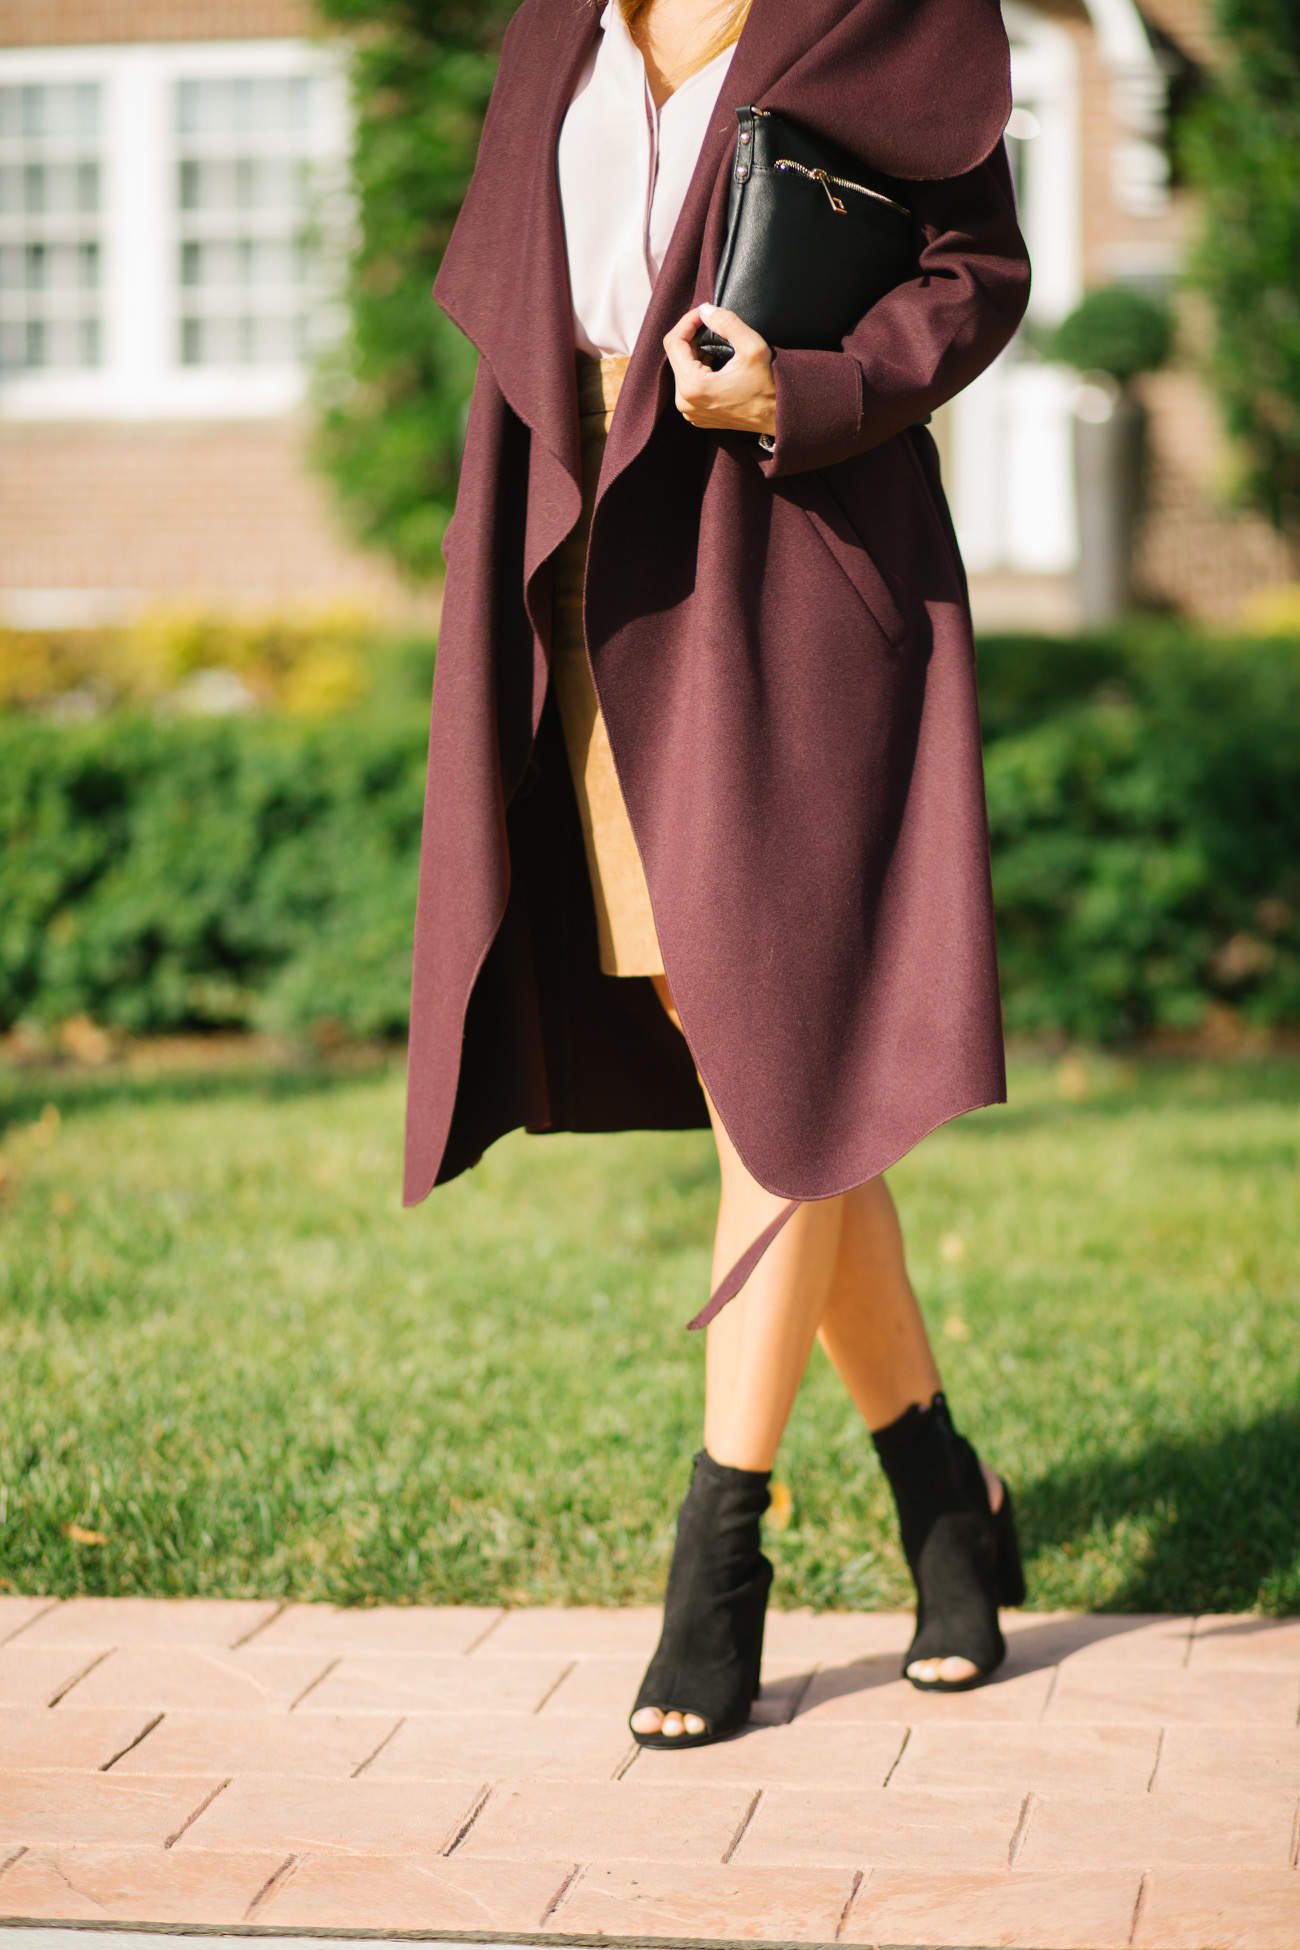 Peep toe booties, plum coloured coat, suede skirt